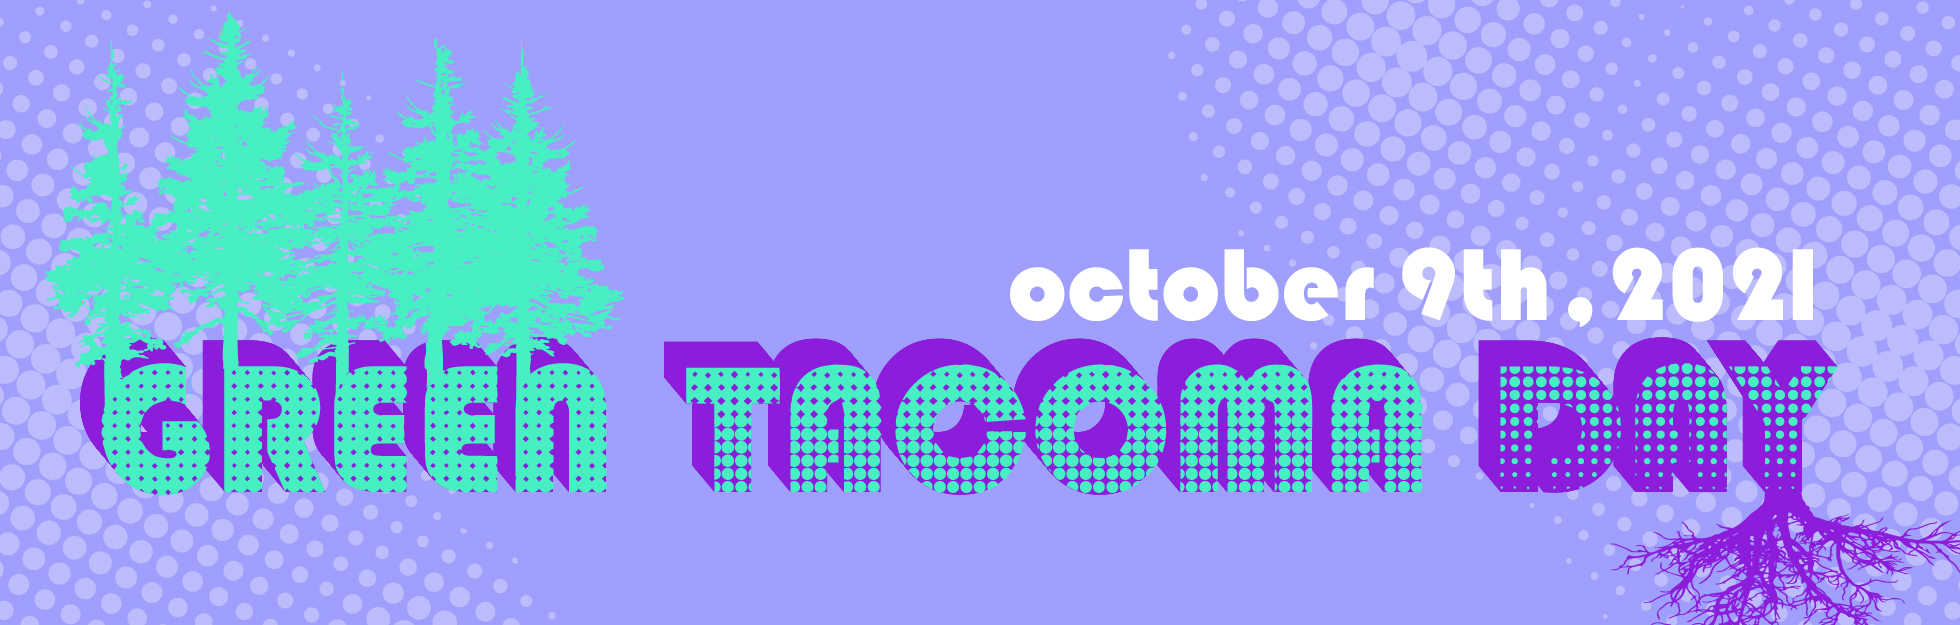 Green Tacoma Day October 9, 2021